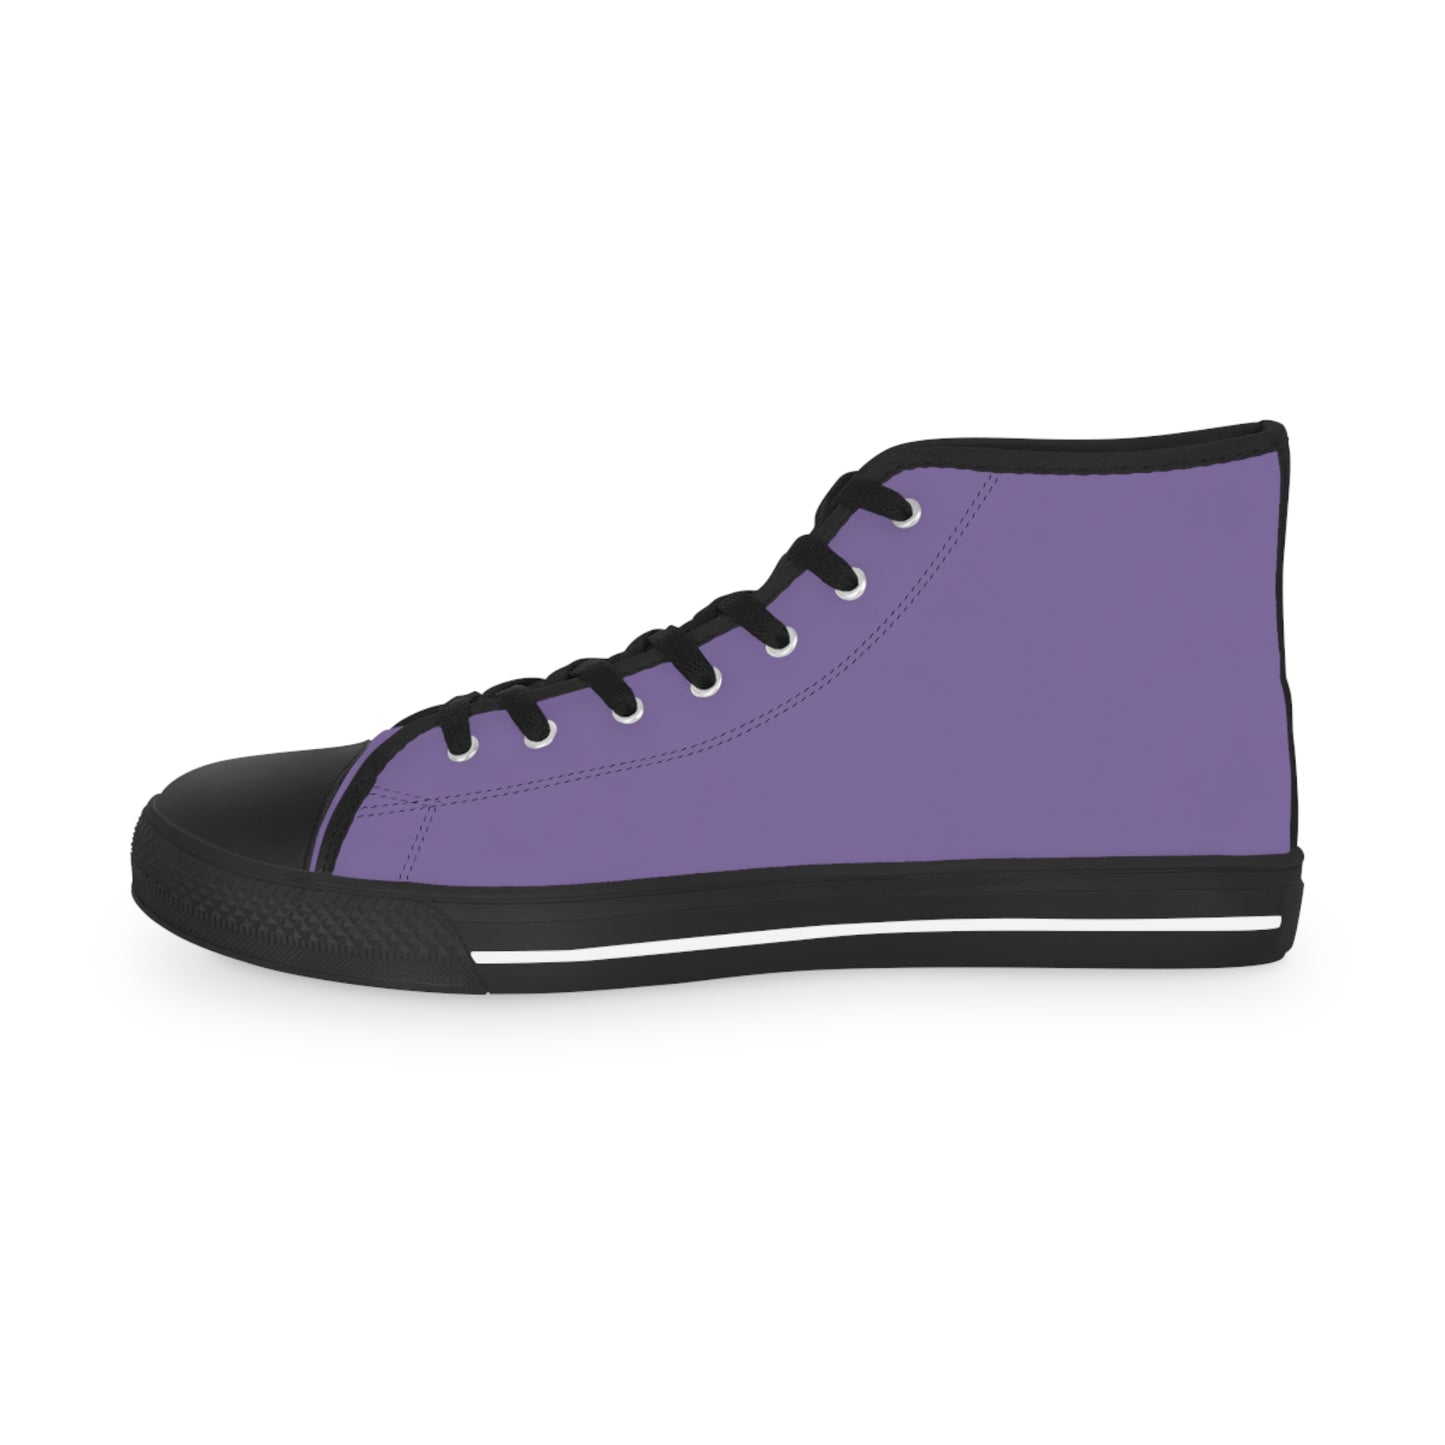 Men's High Top Sneakers - Purple US 14 White sole